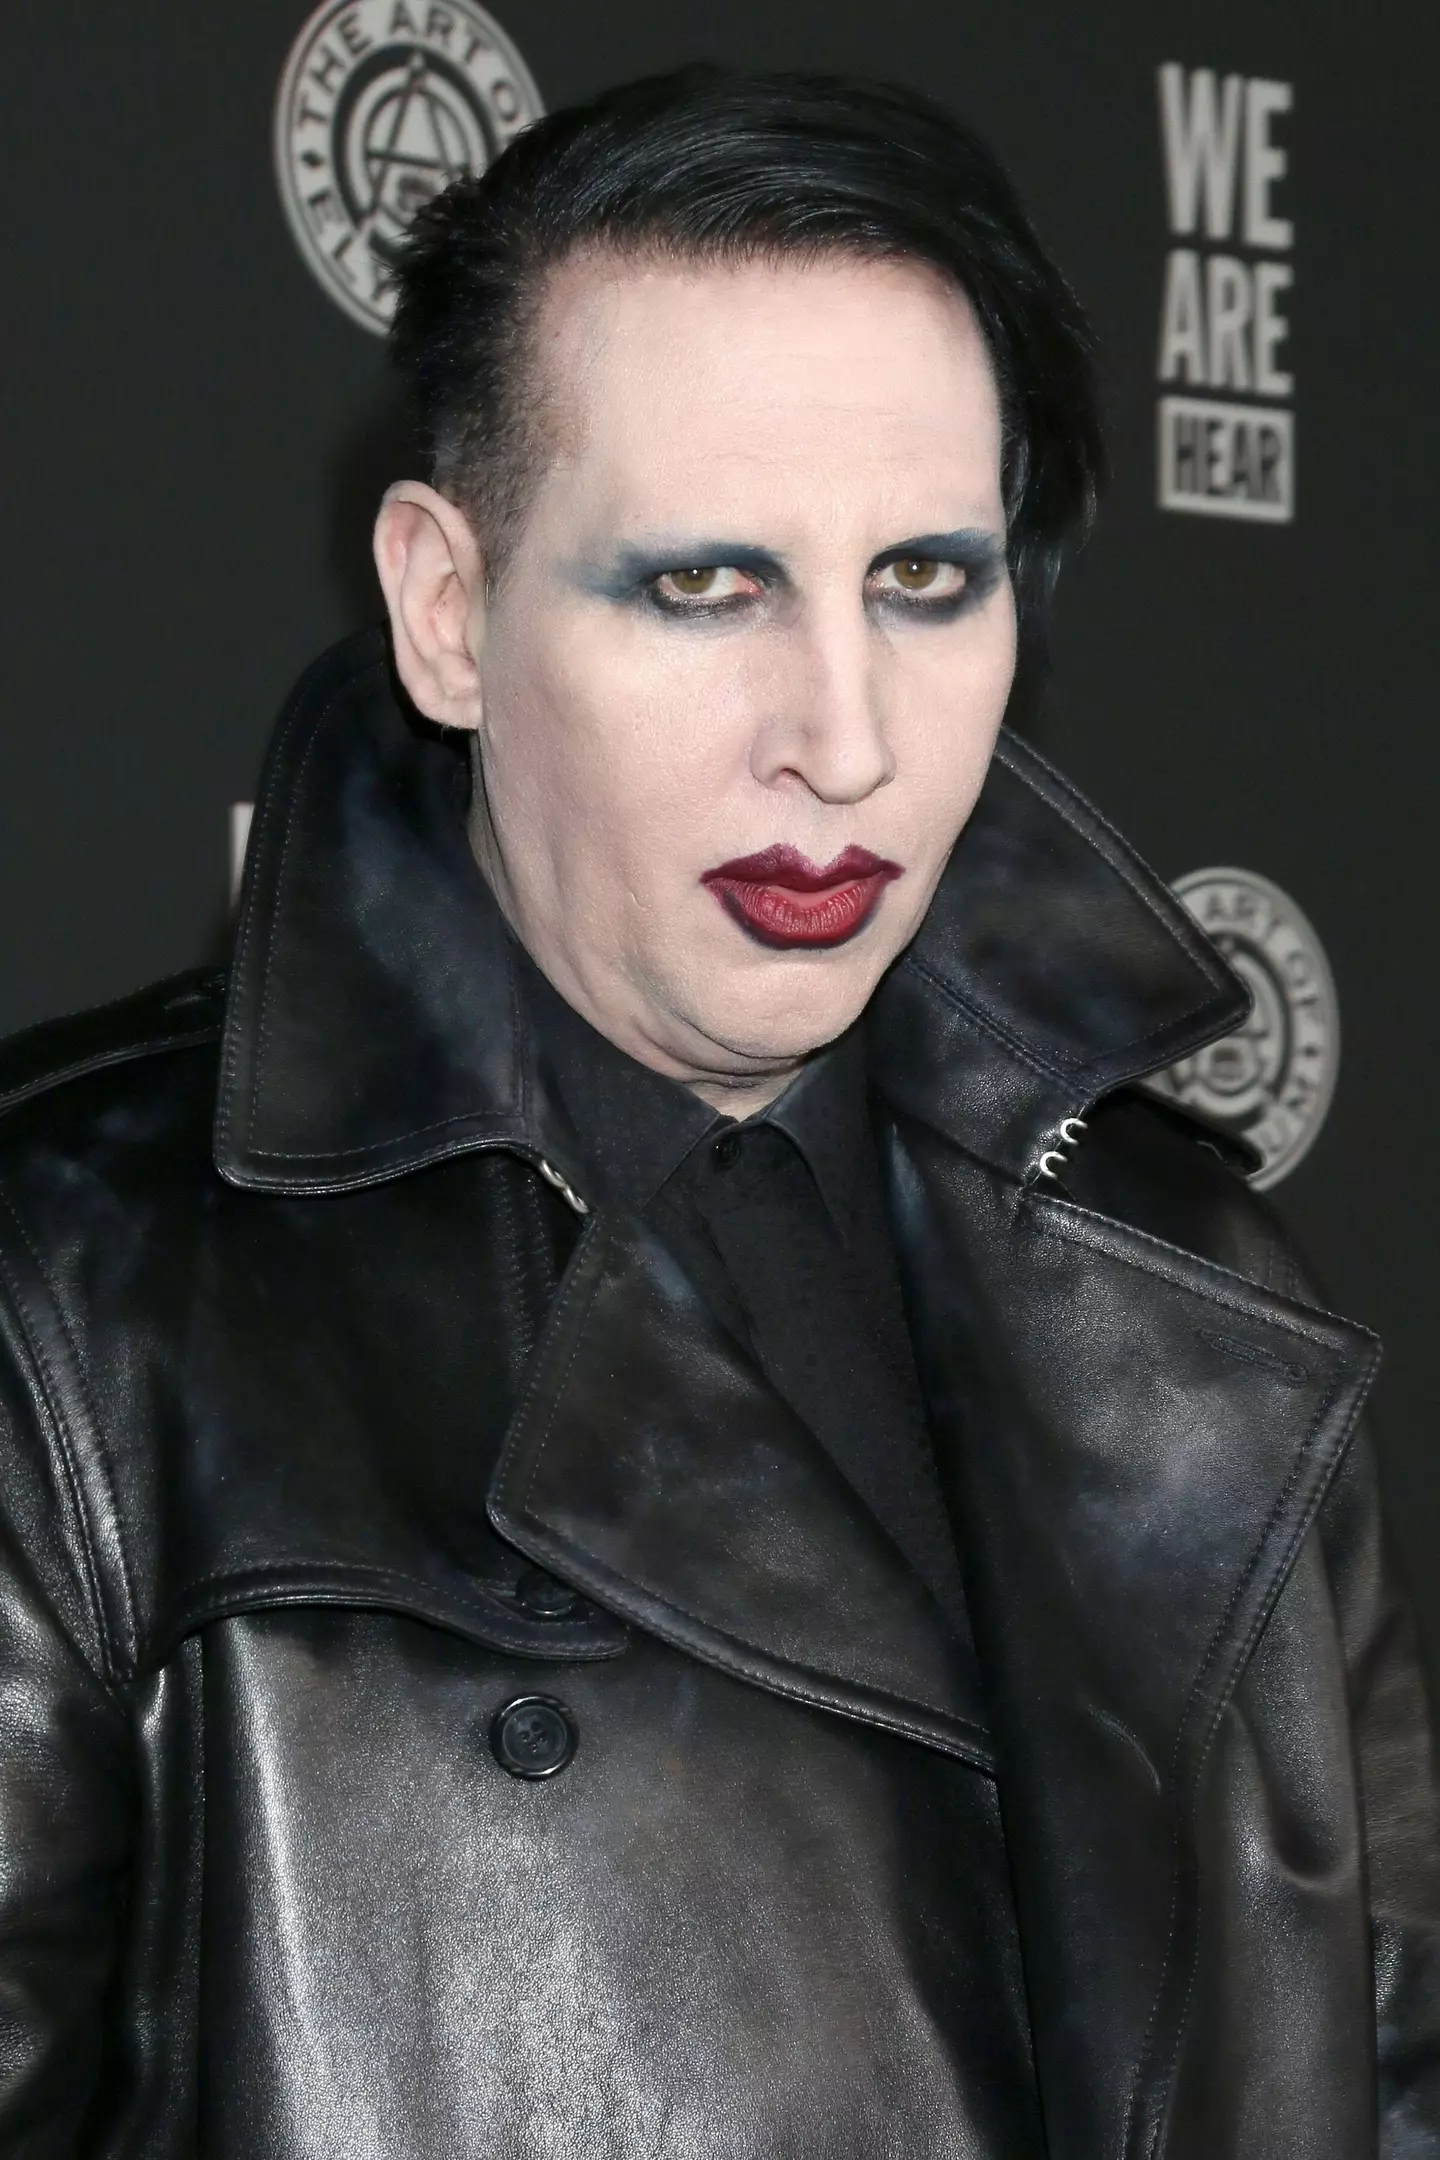 Marilyn Manson has denied any wrongdoing. (Alamy)